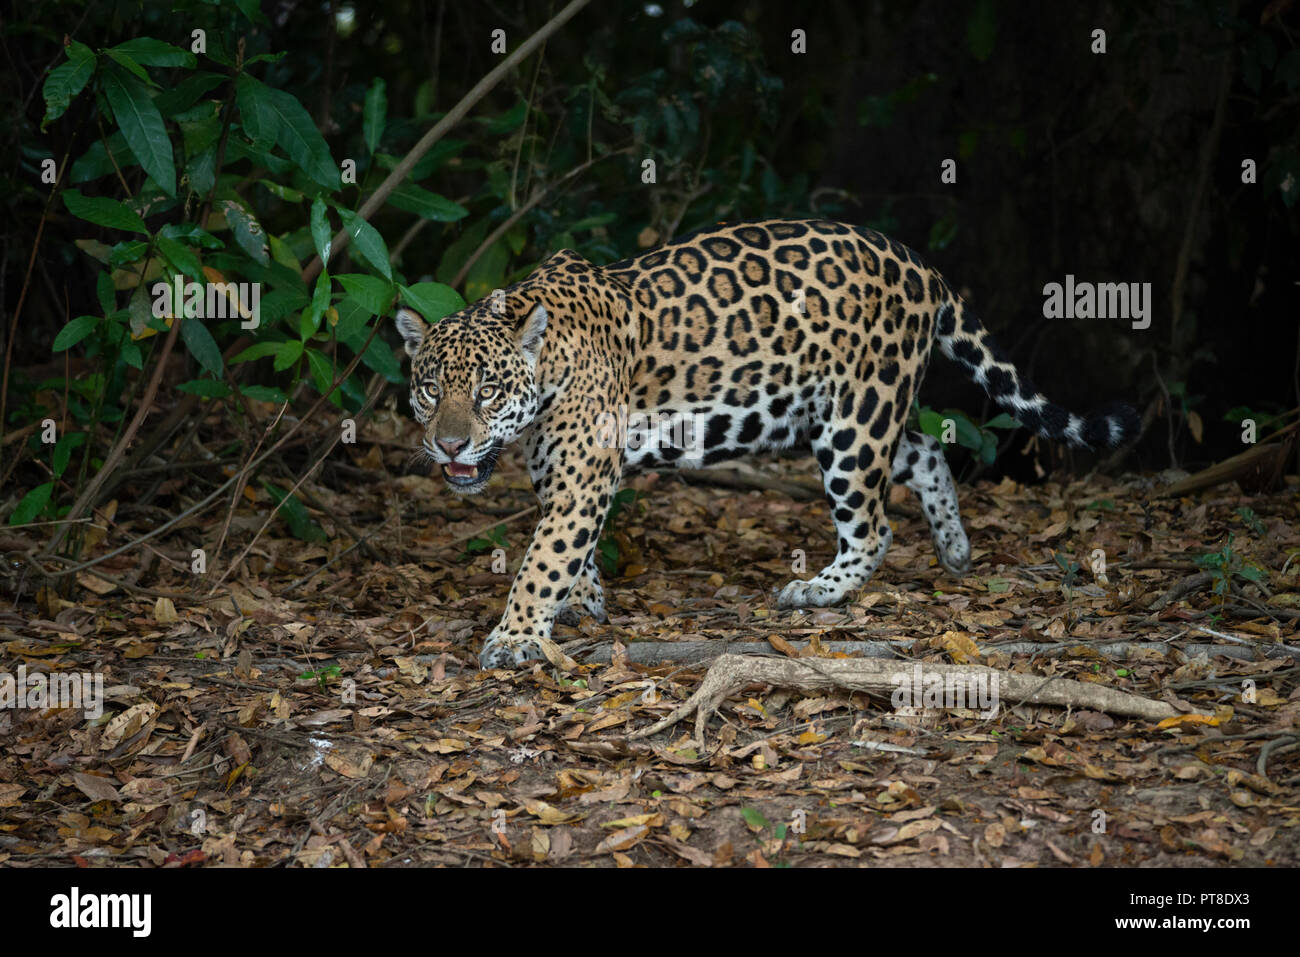 A wild Jaguar from North Pantanal, Brazil Stock Photo